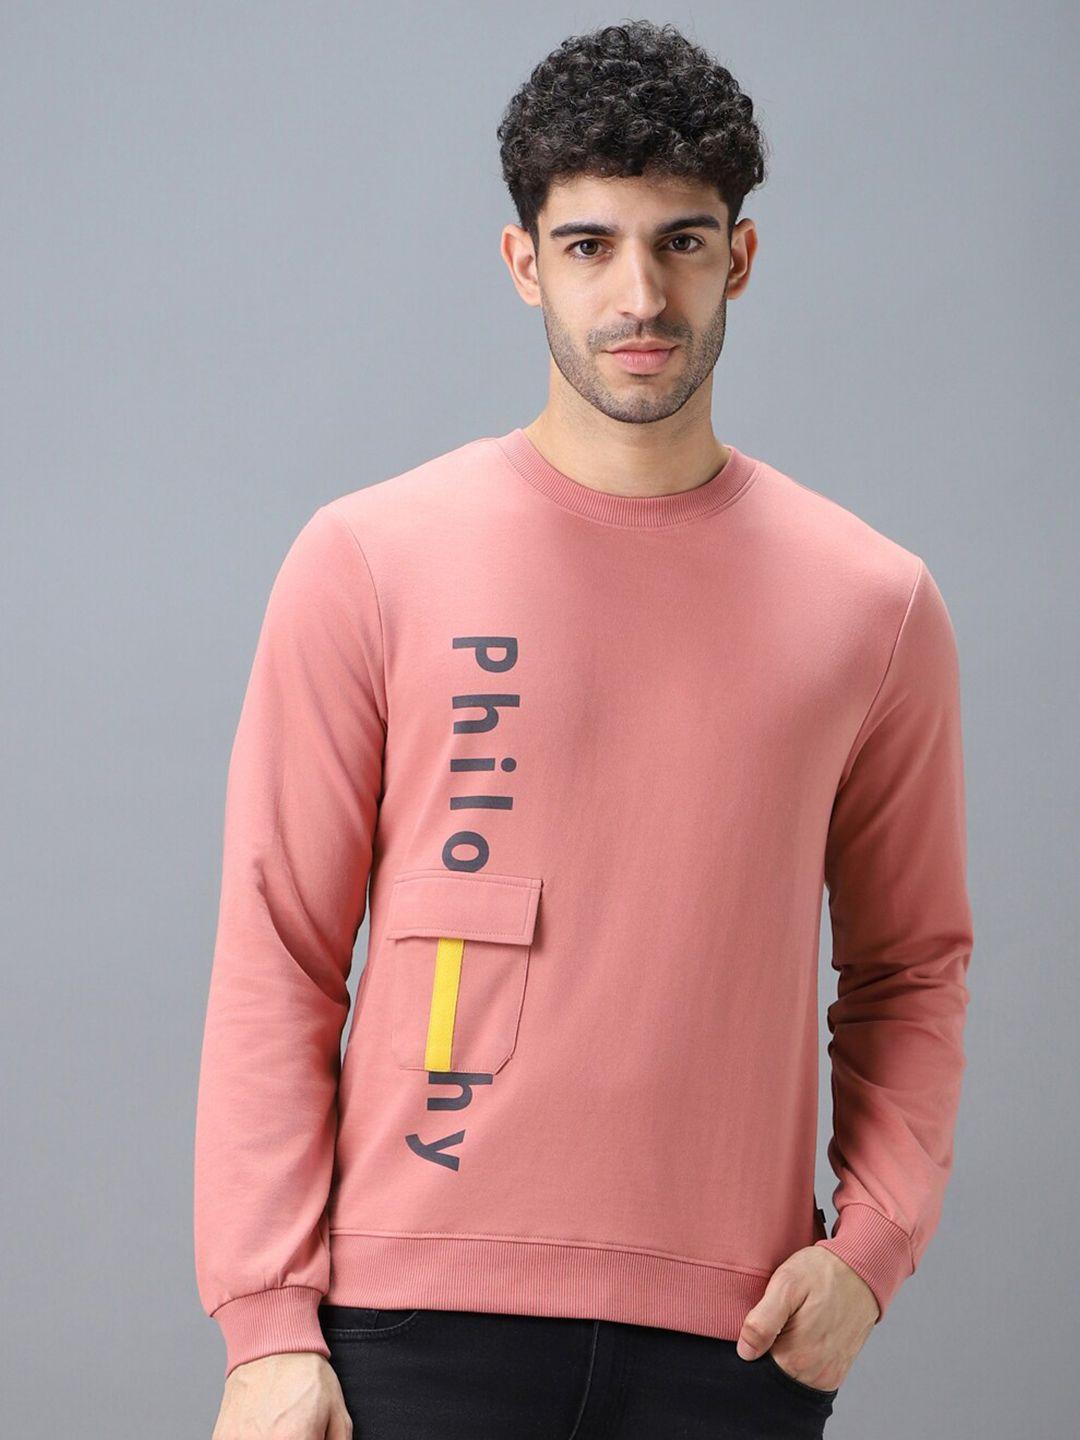 urbano fashion typography printed cotton sweatshirt